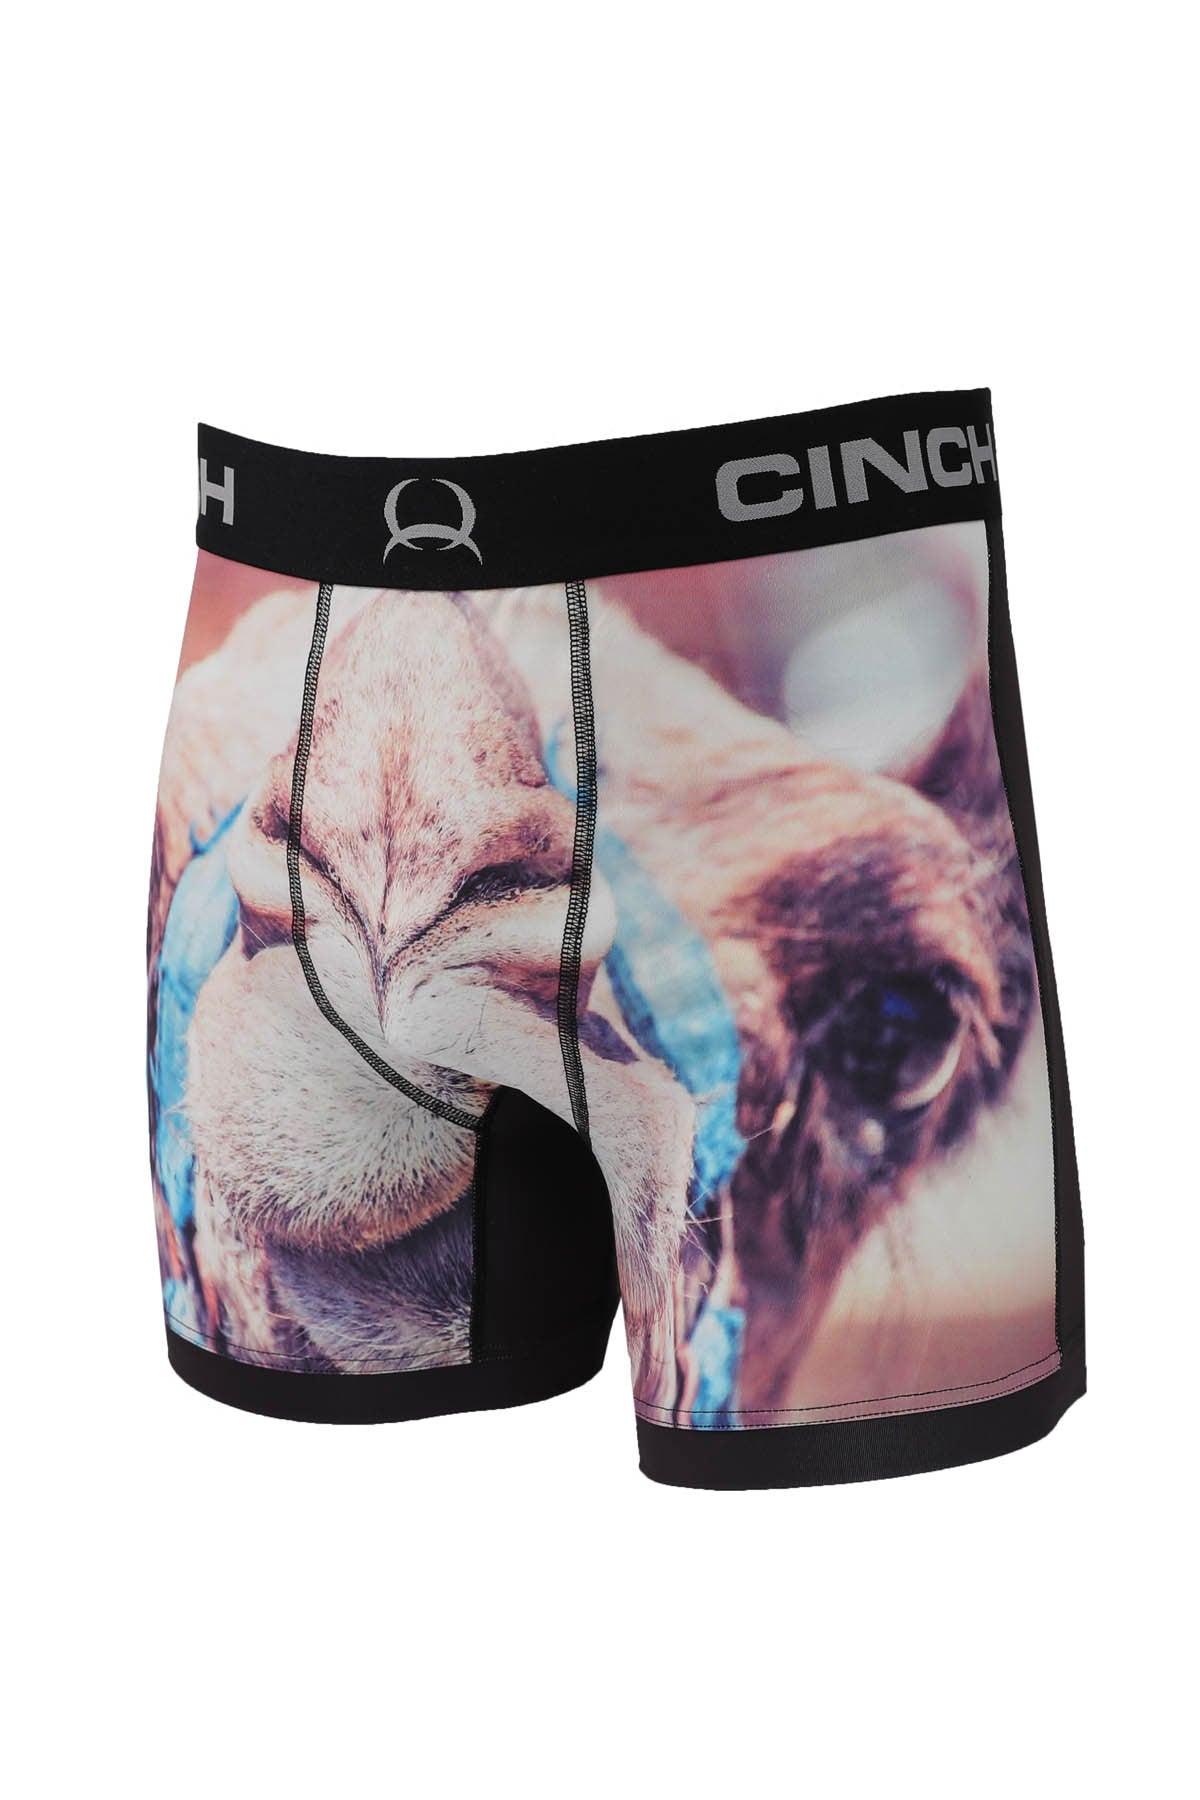 CINCH Men's Camel Boxer